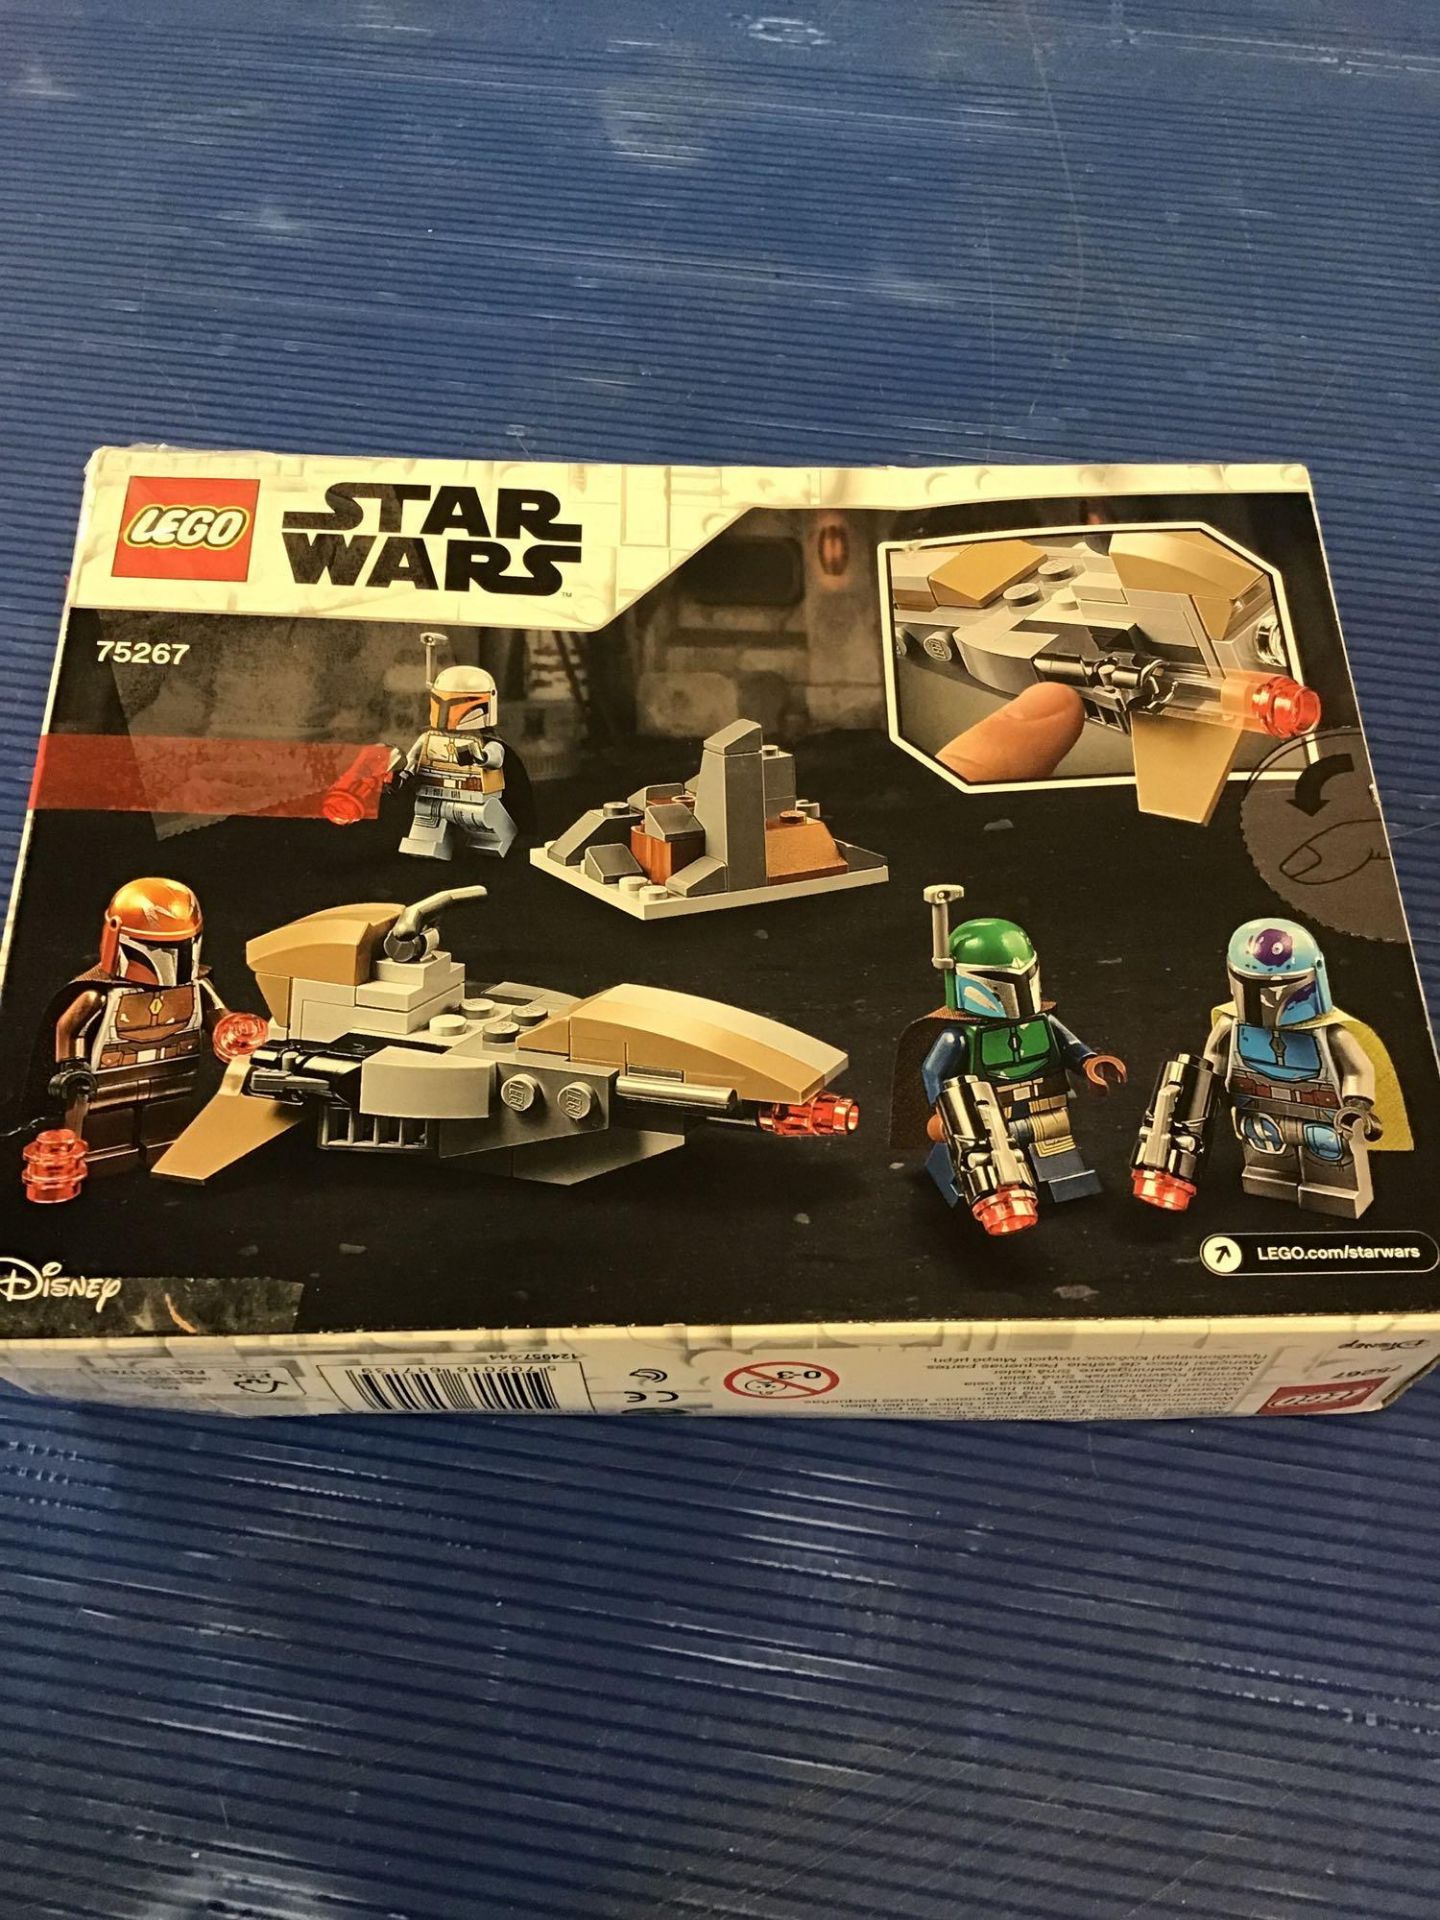 LEGO Star Wars Mandalorian Battle Pack Building Set - 75267, £13.00 RRP - Image 2 of 5